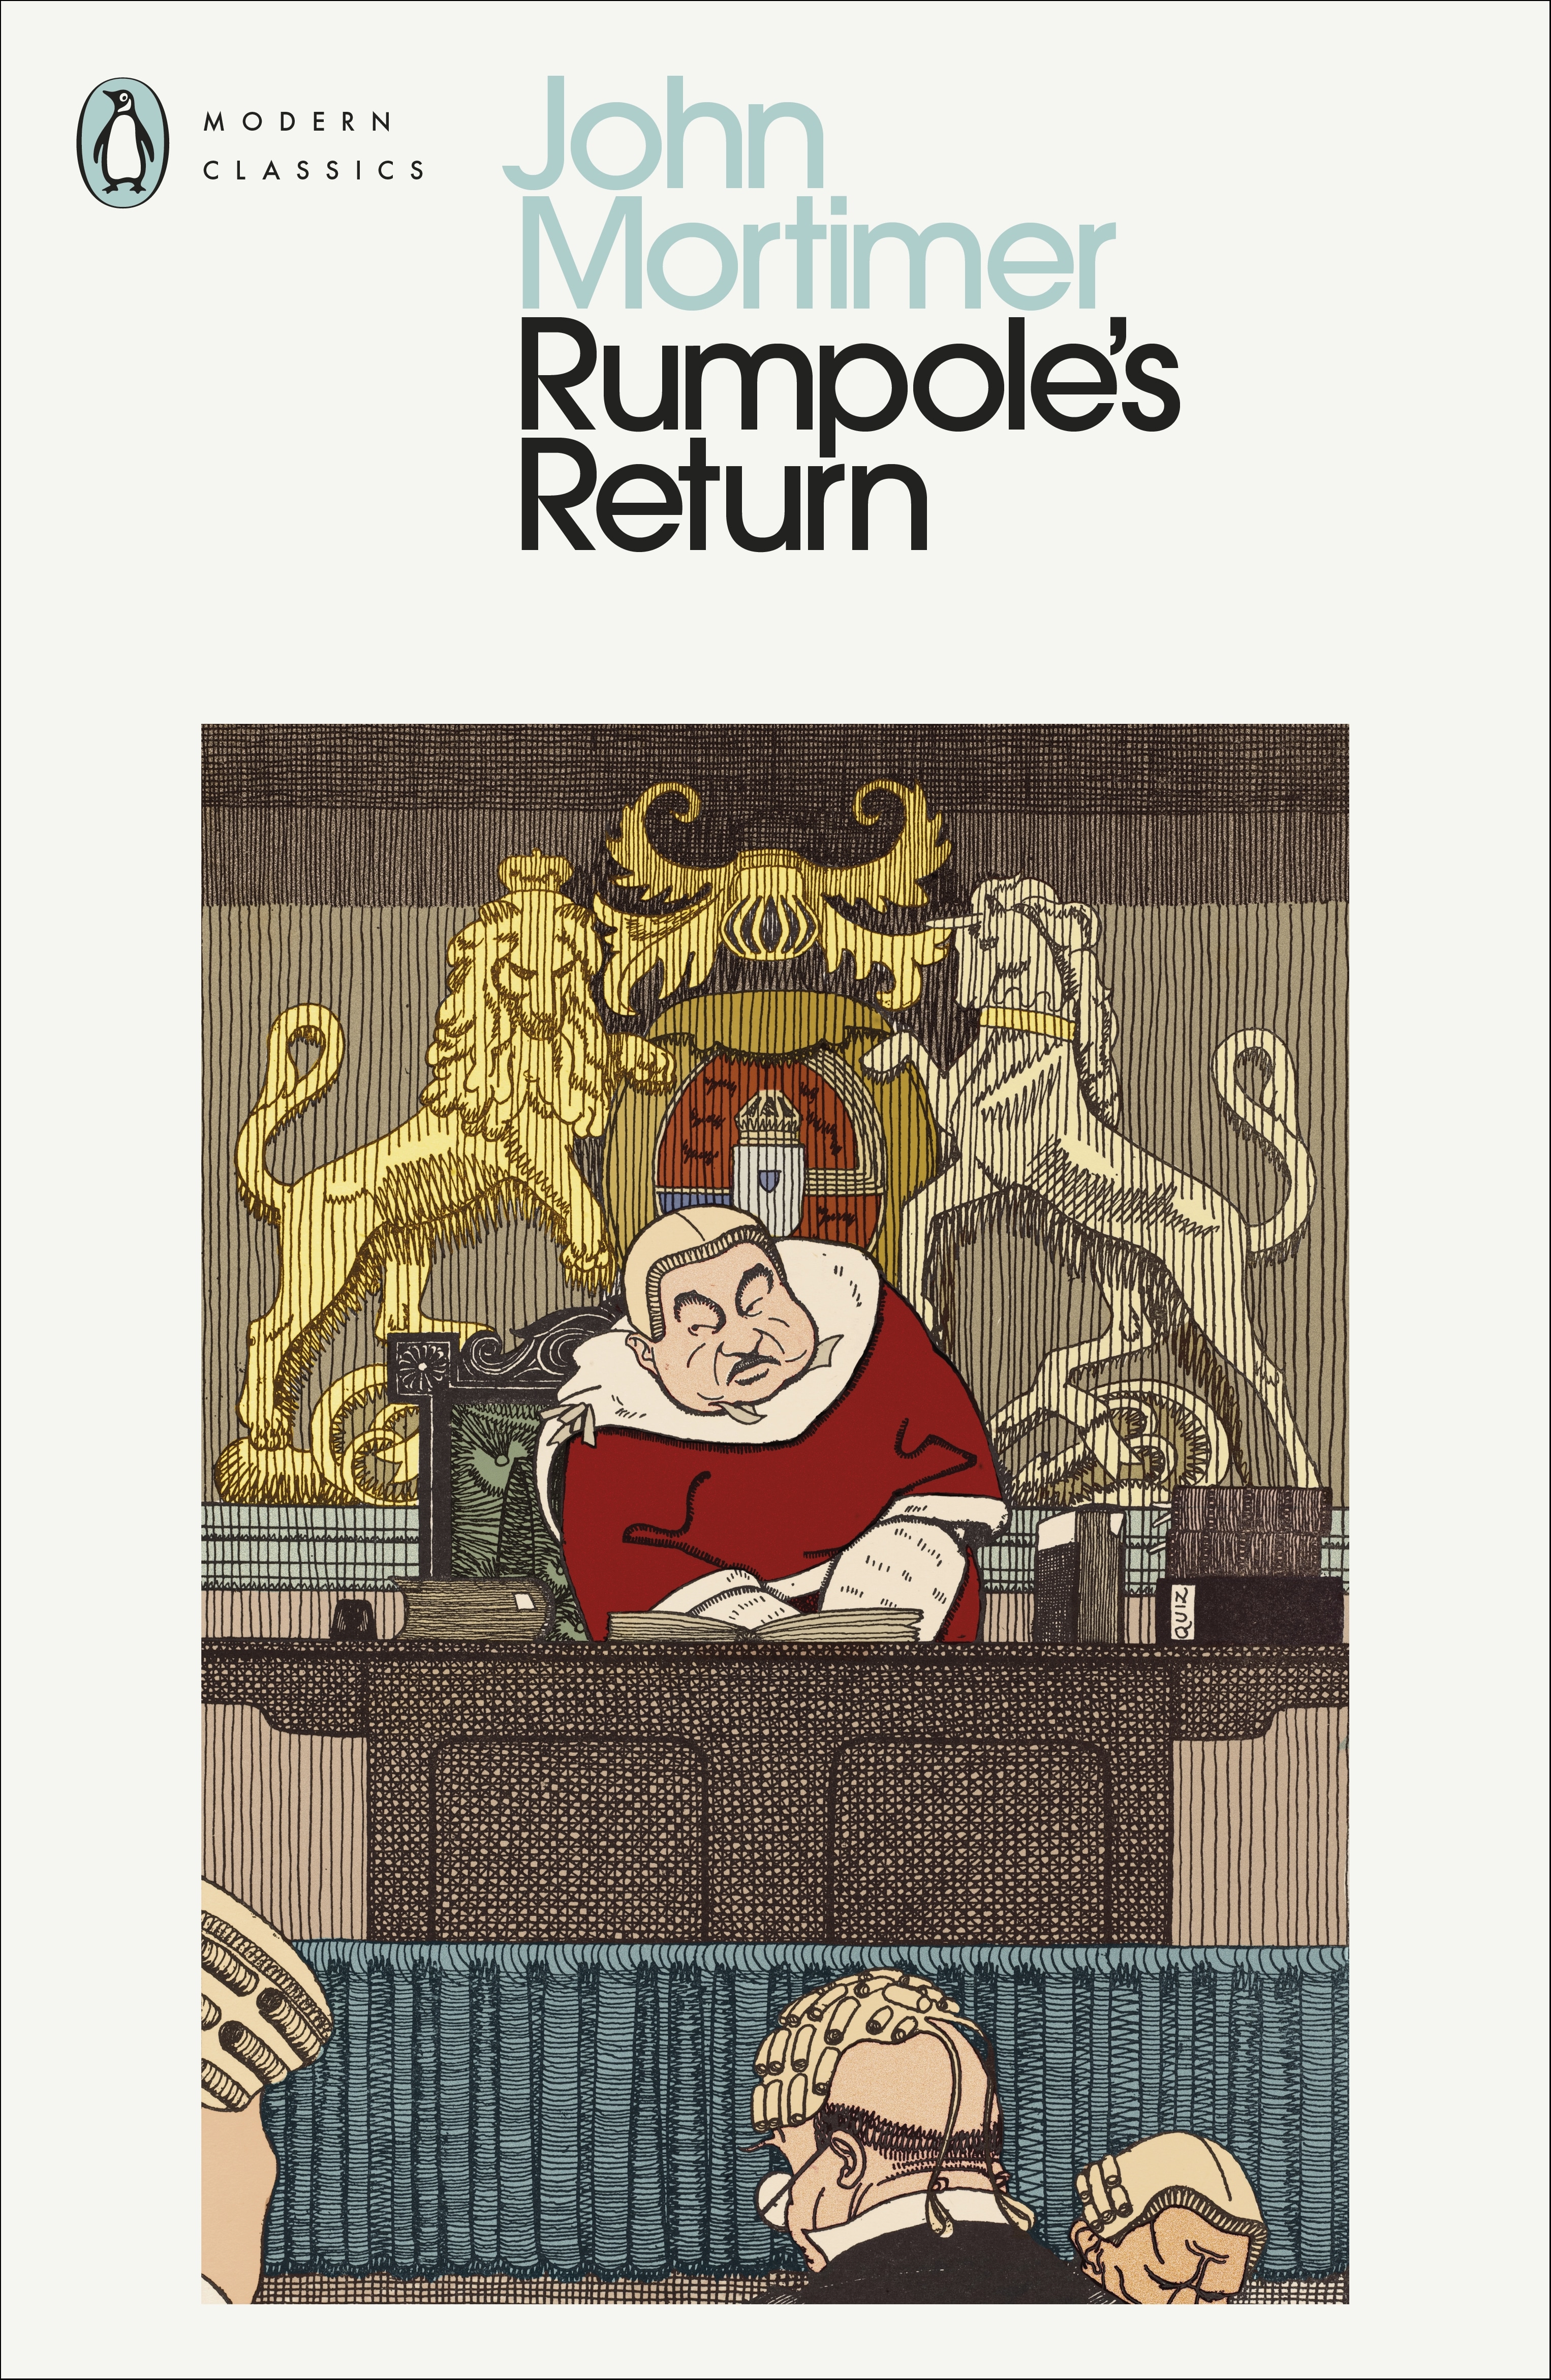 Book “Rumpole's Return” by John Mortimer — November 4, 2021